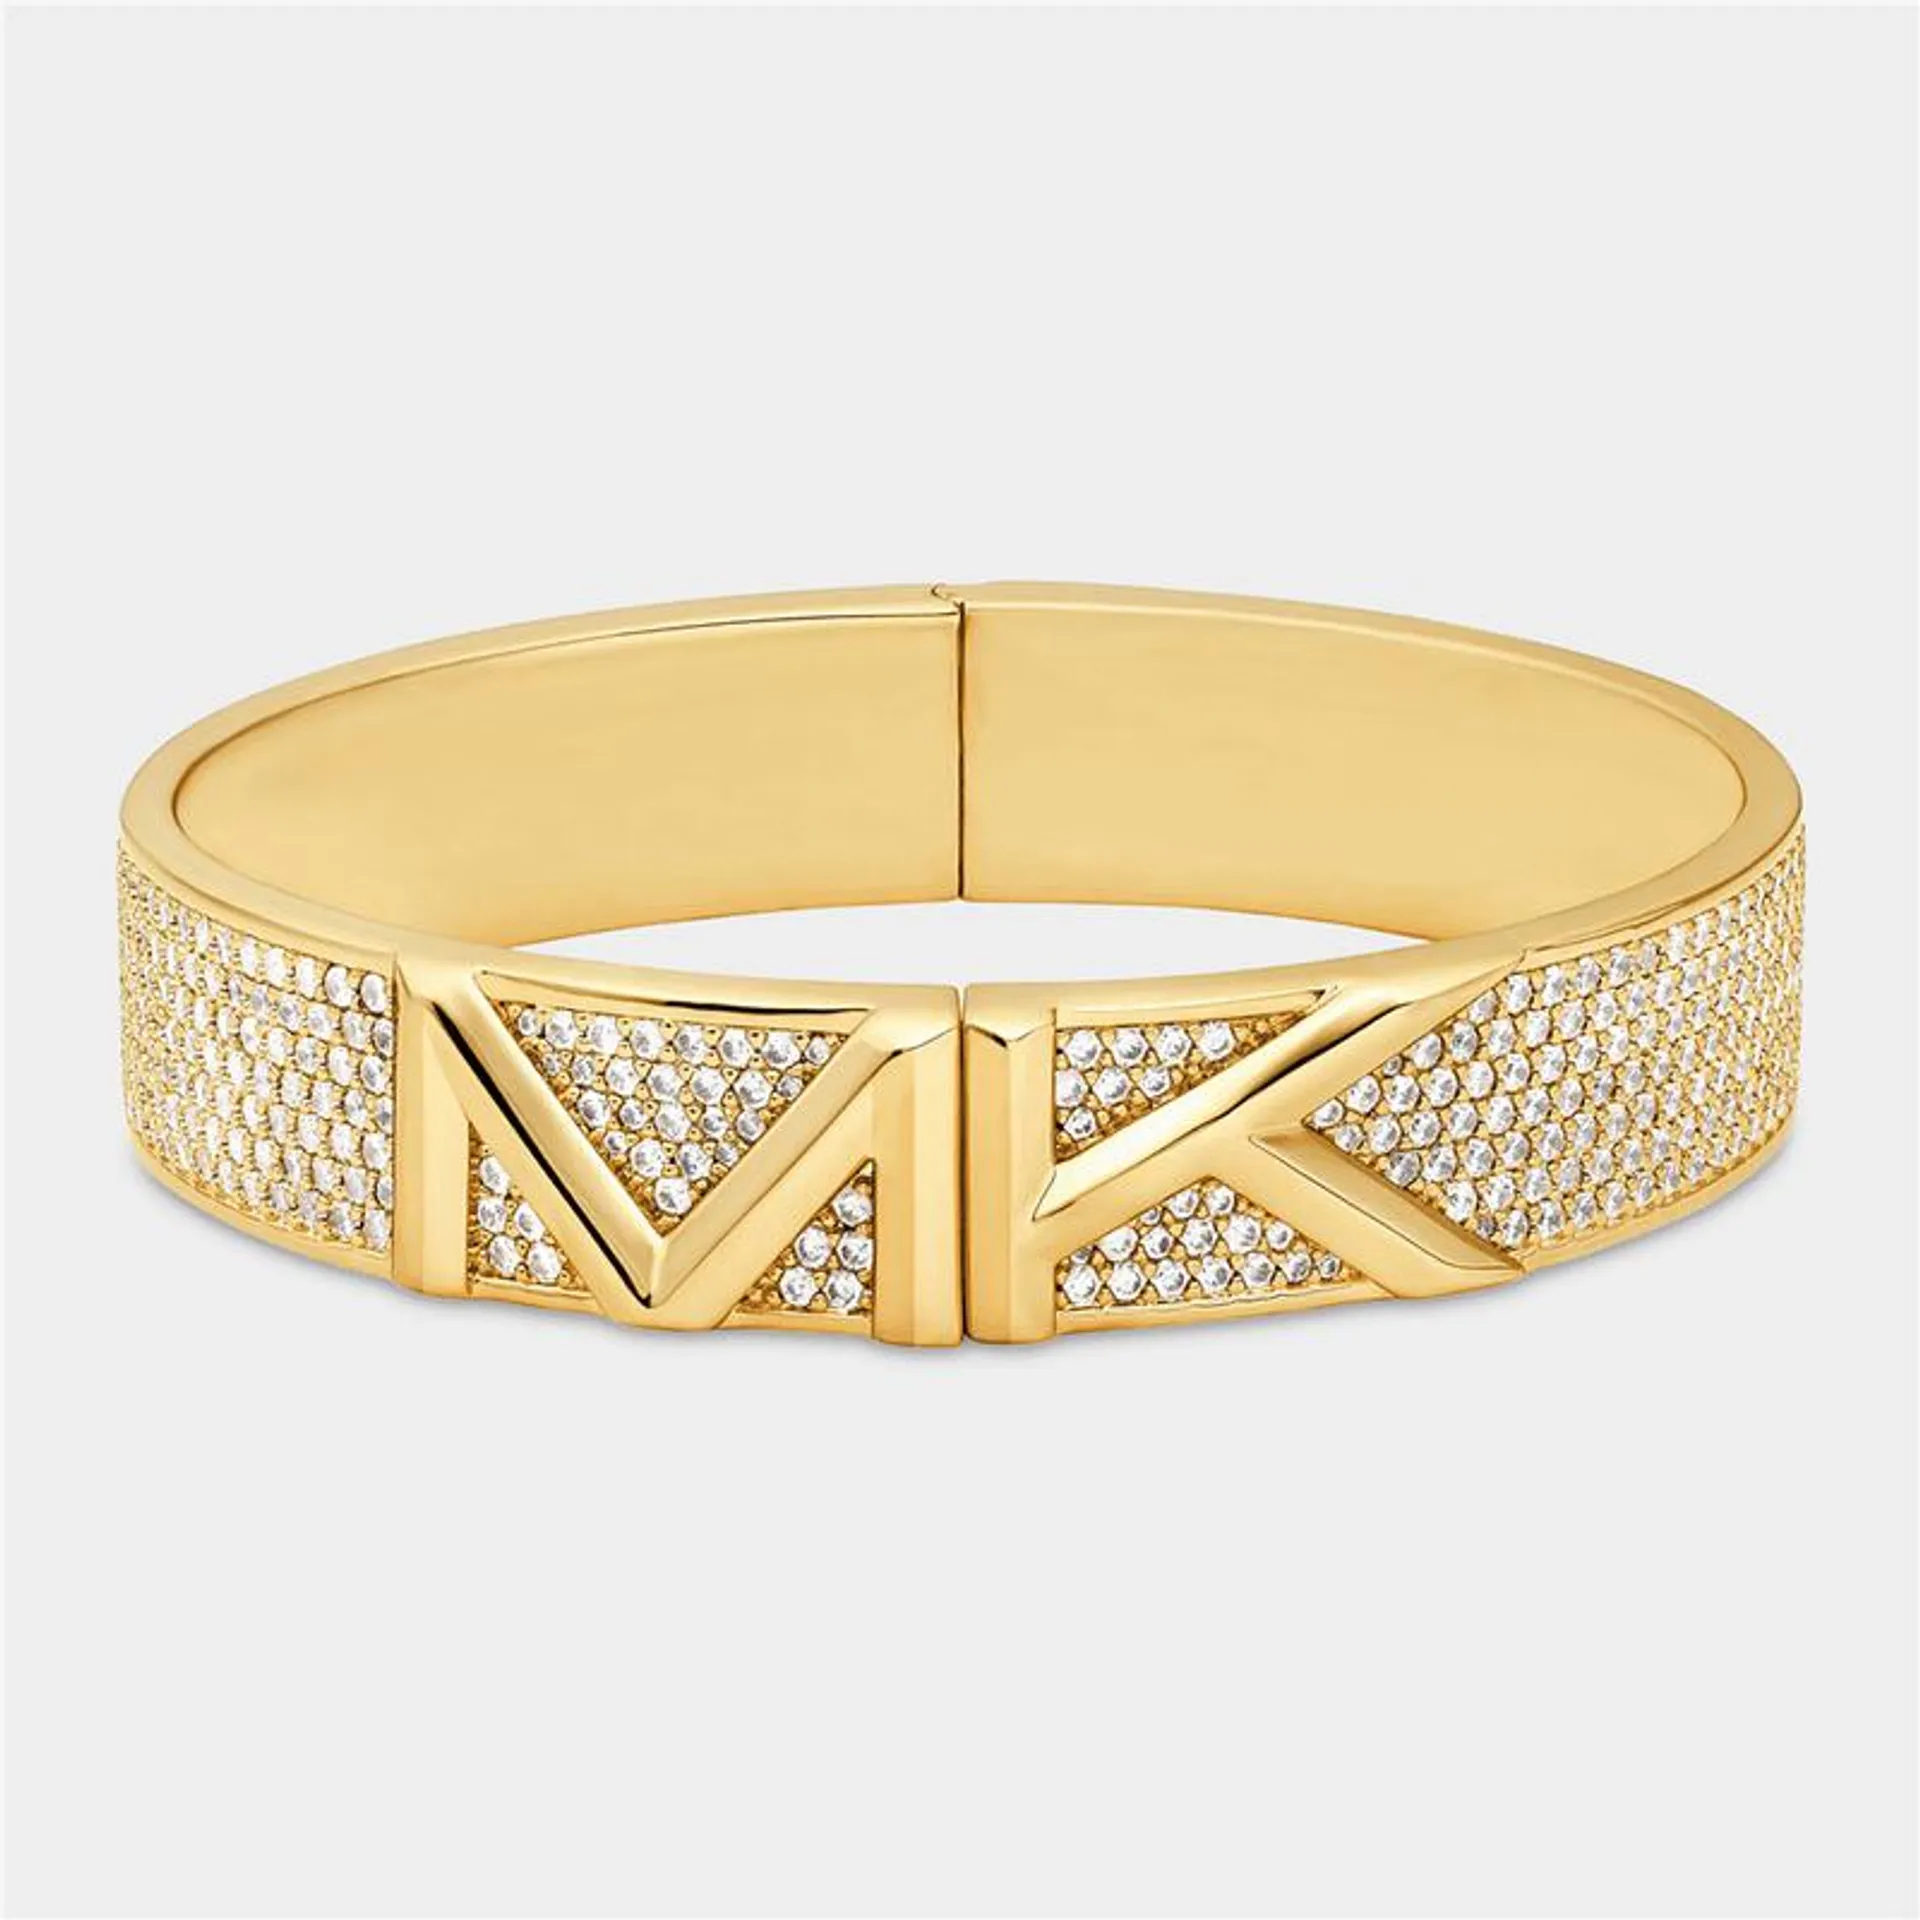 Michael Kors Metallic Muse Collection Gold Plated Cubic Zirconia Bangle Bracelet